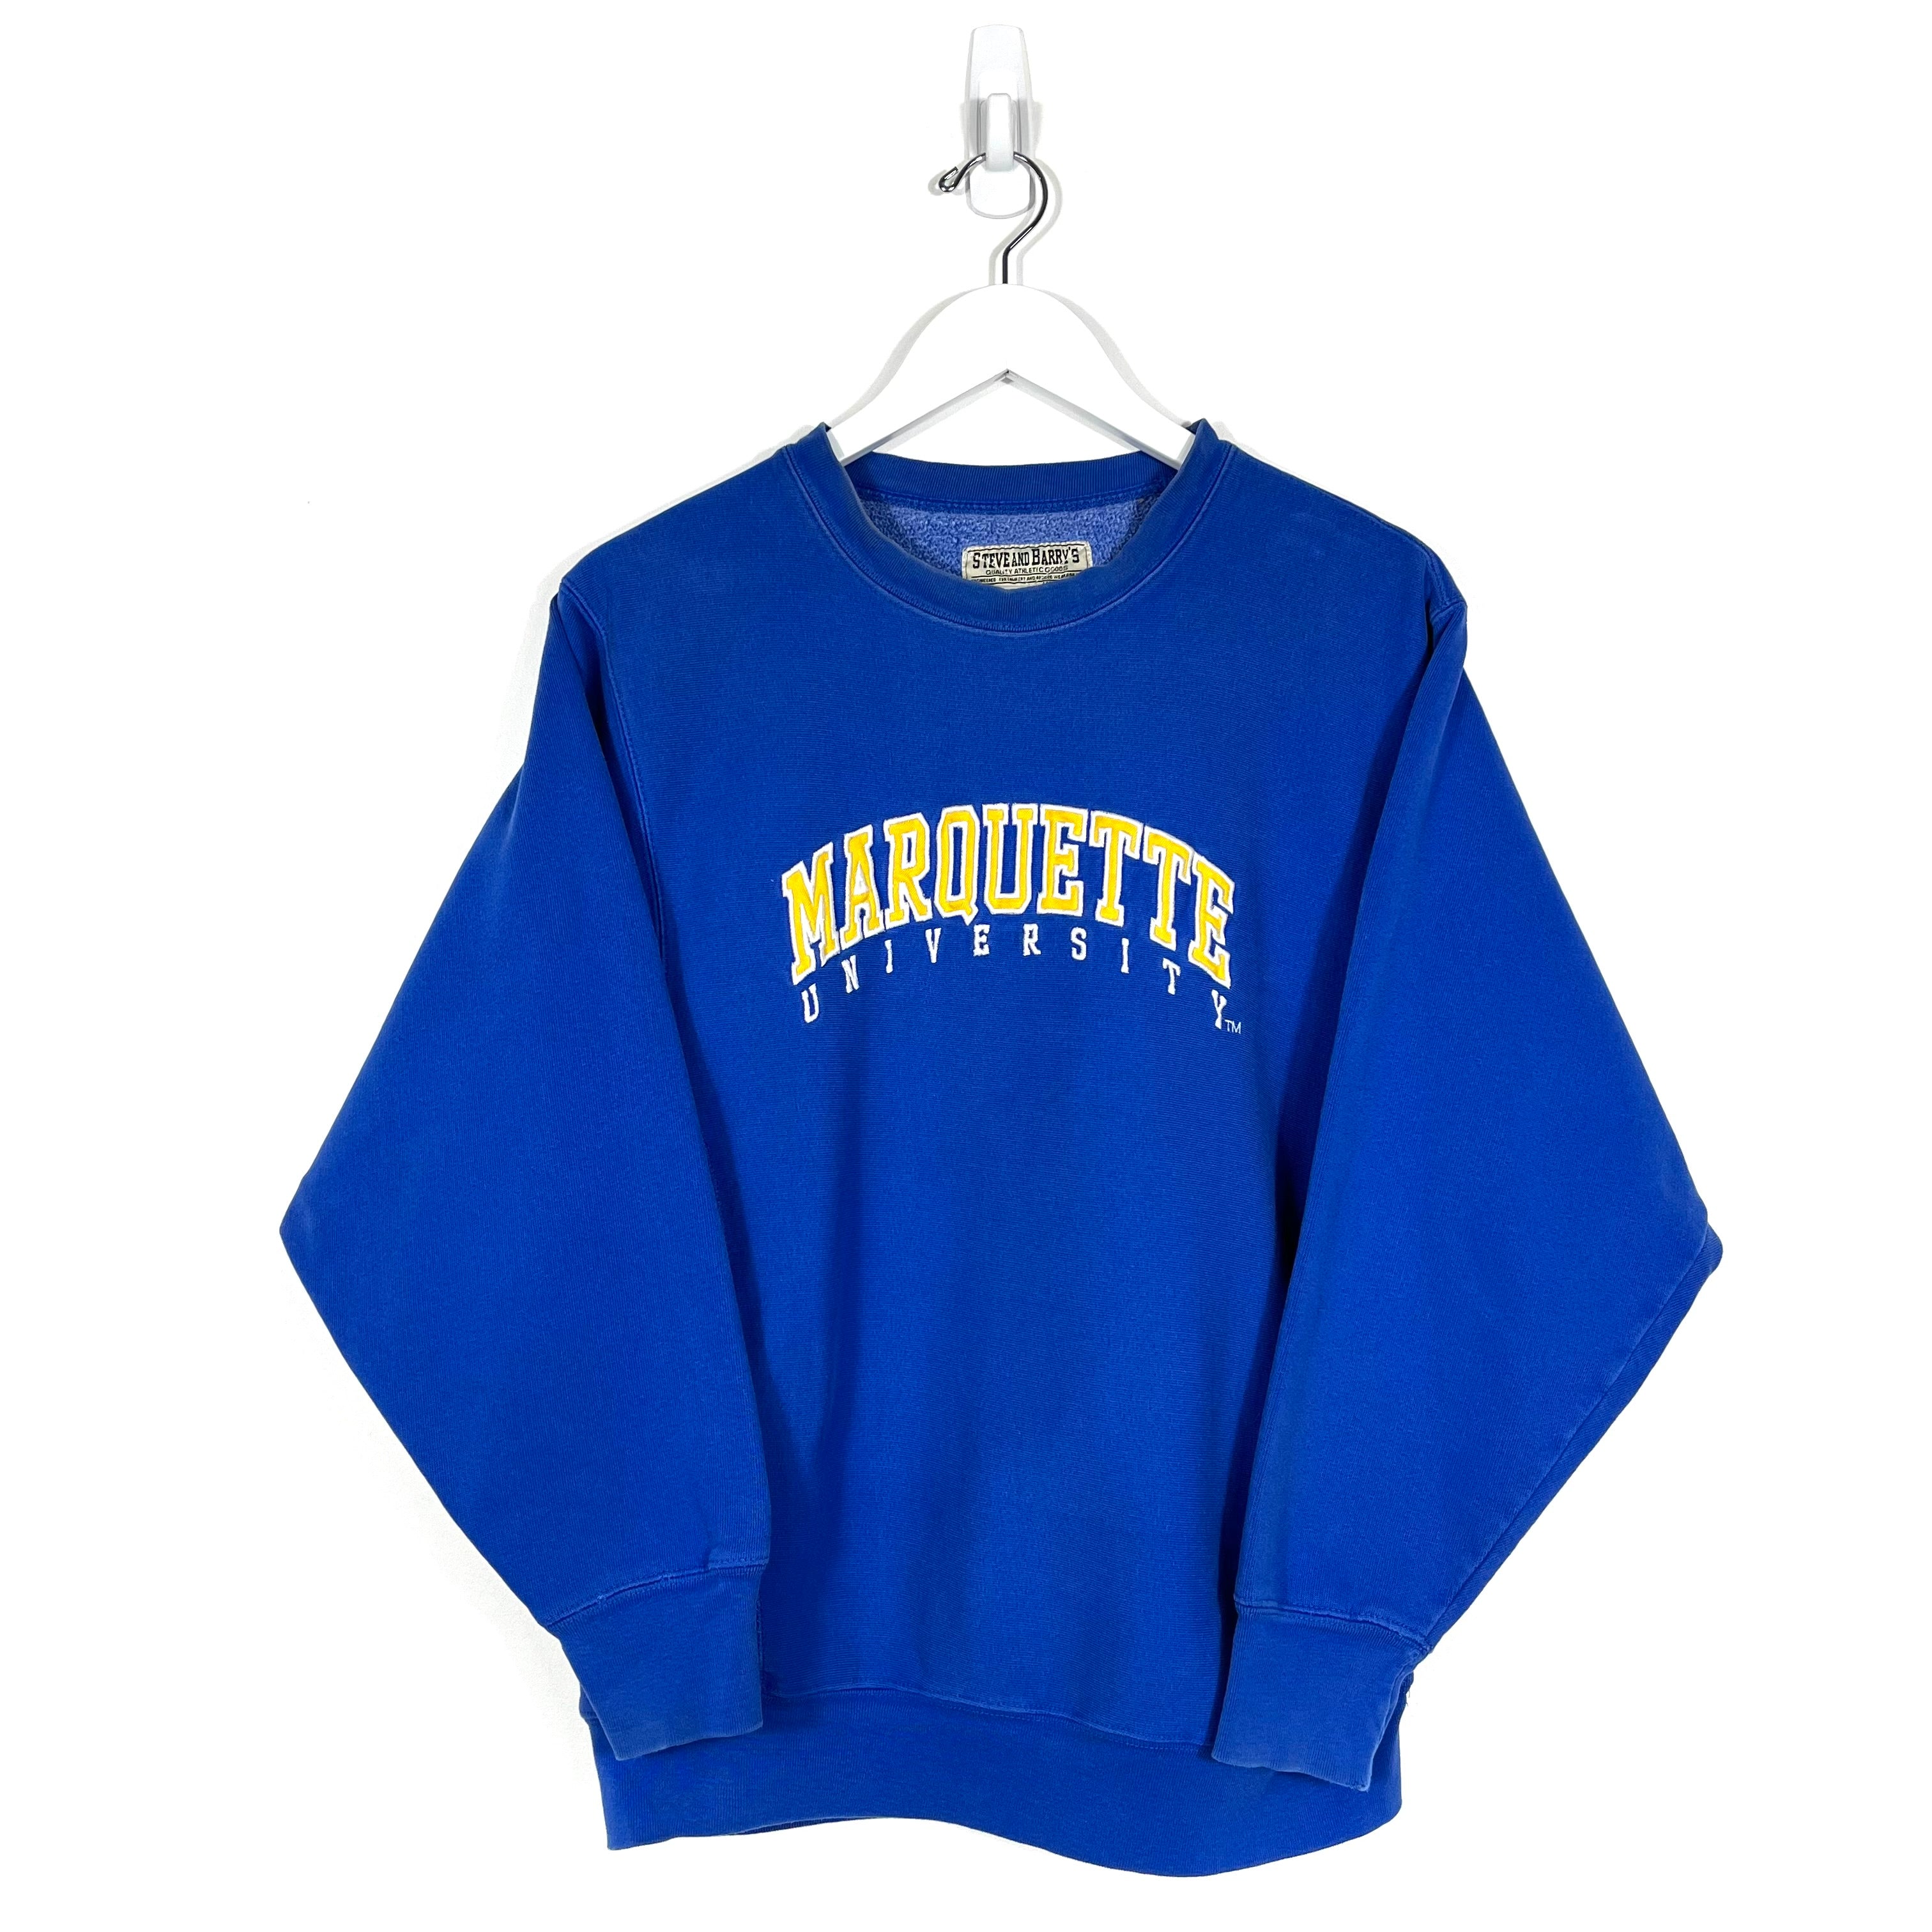 Vintage Marquette University Crewneck Sweatshirt - Women's Medium